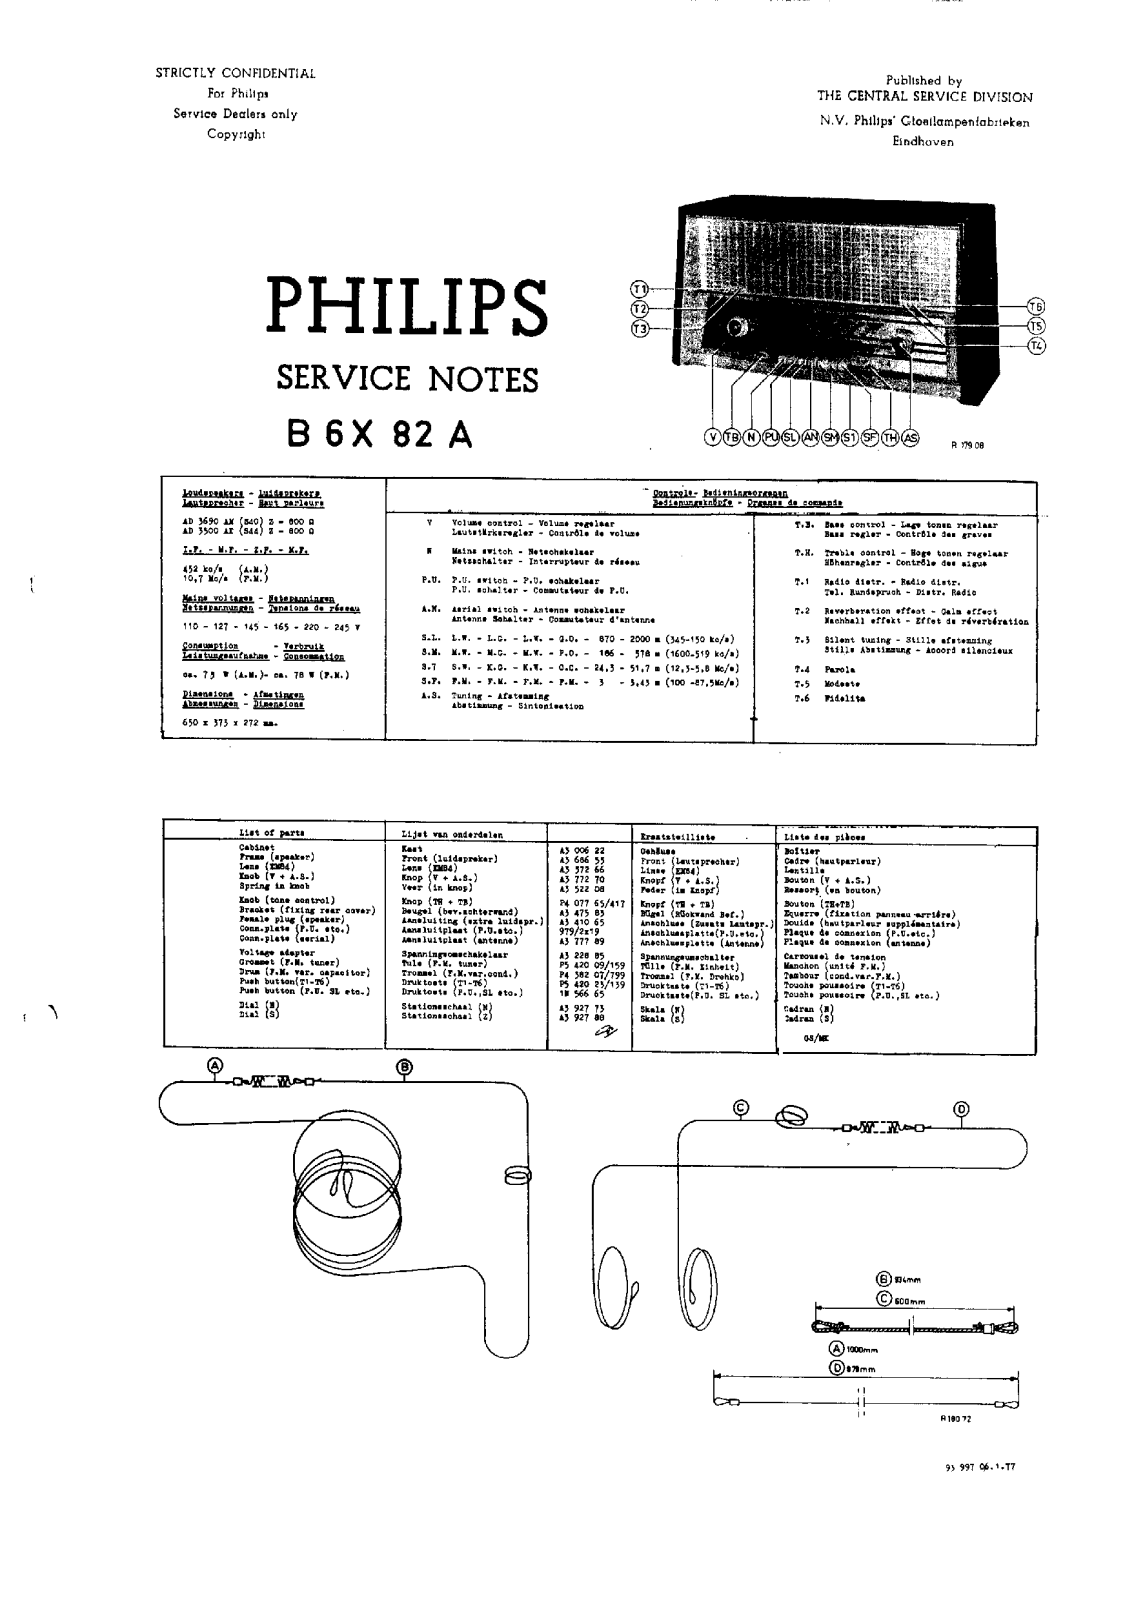 Philips B-6-X-82-A Service Manual